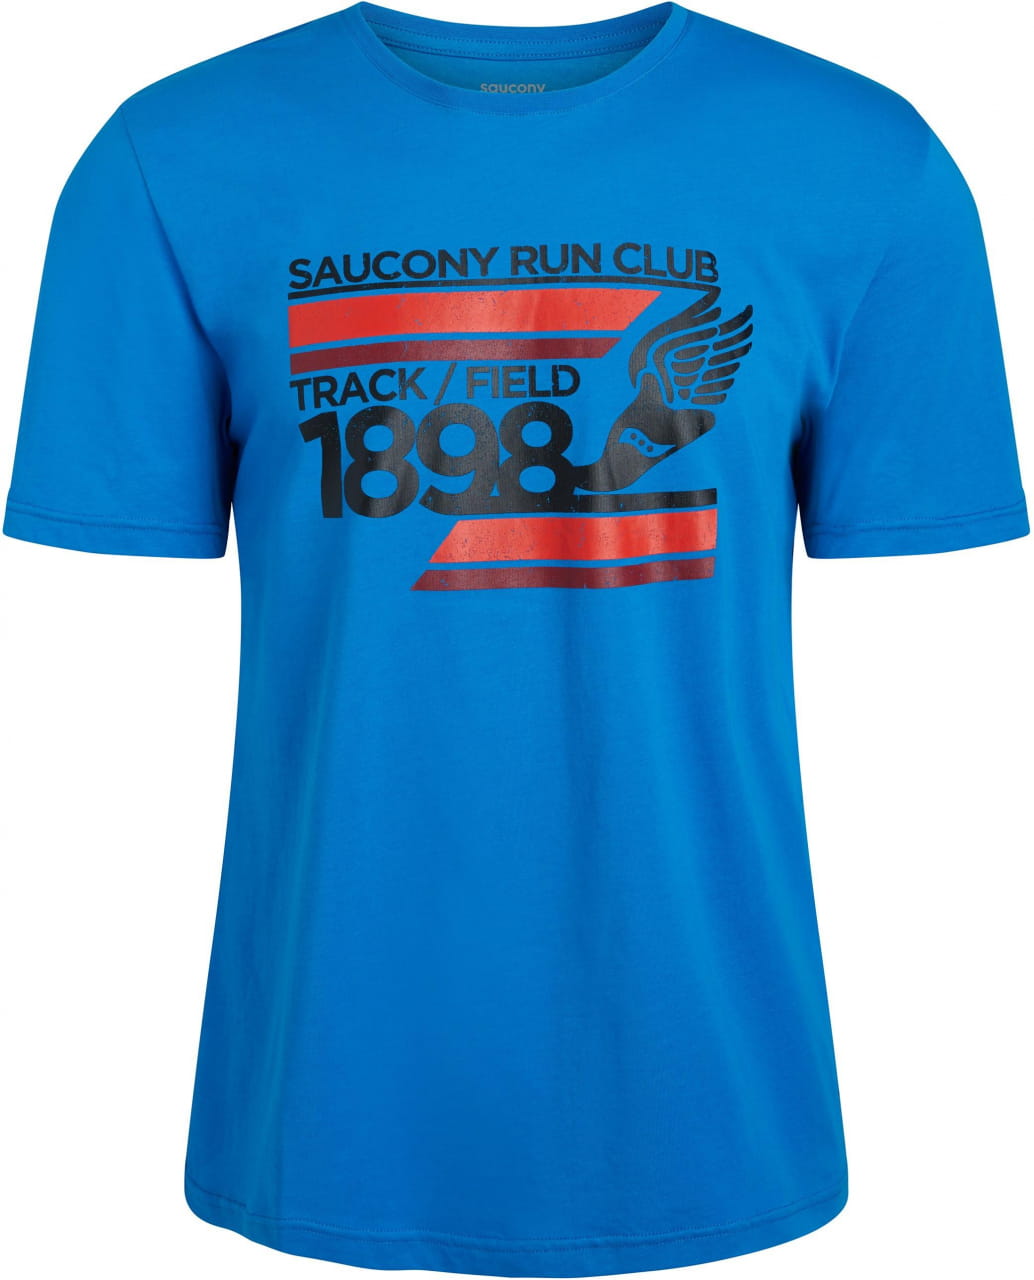 Sporthemd für Männer Saucony Rested Short Sleeve